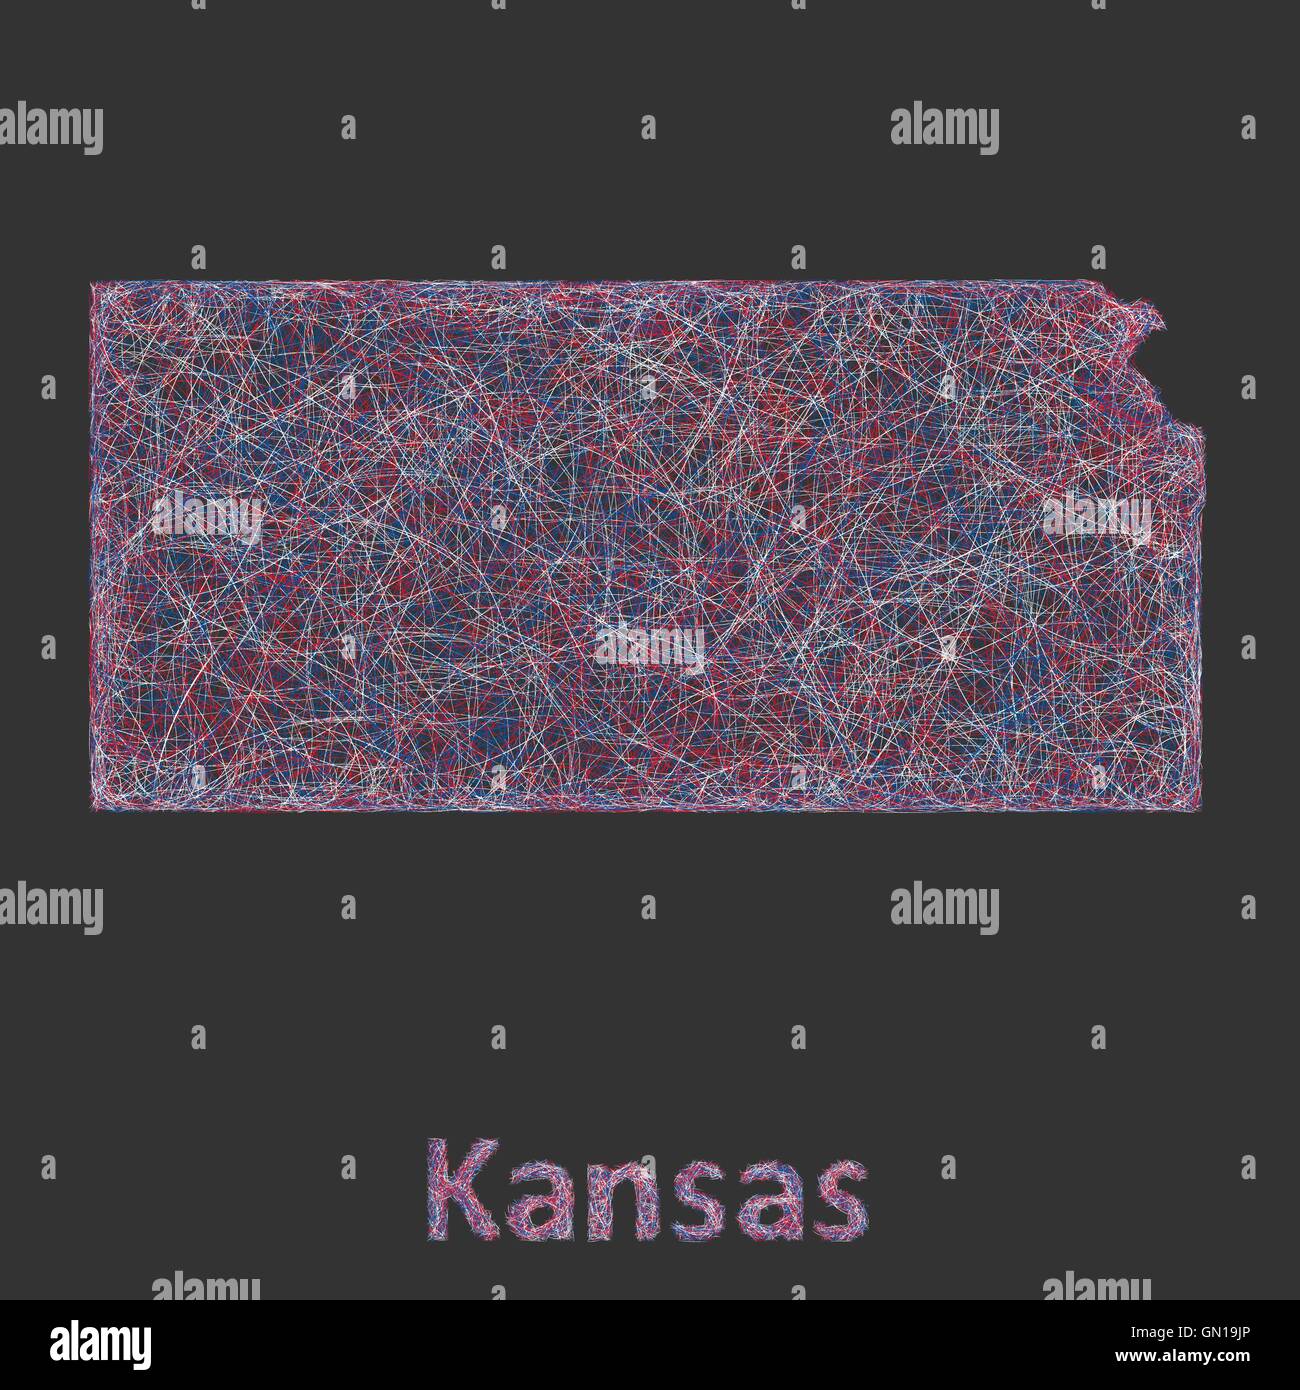 Kansas Linie Art Karte Stock Vektor